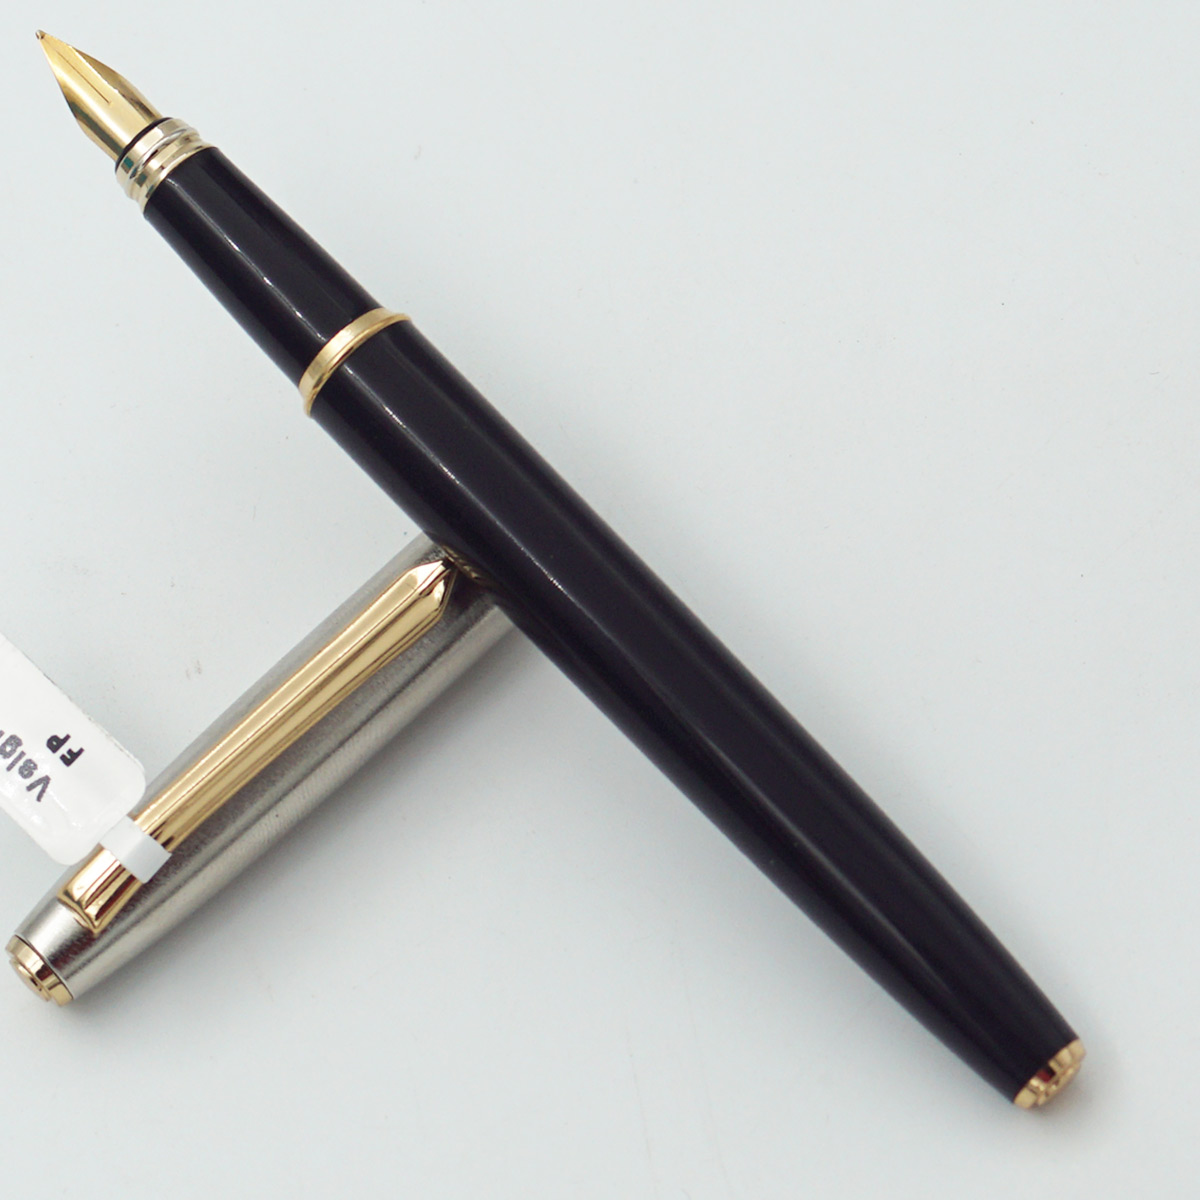 Vsign Stride Black Color Body With Golden Color Clip Medium Nib Eye Dropper Model Fountain Pen(3 in 1) SKU 24473